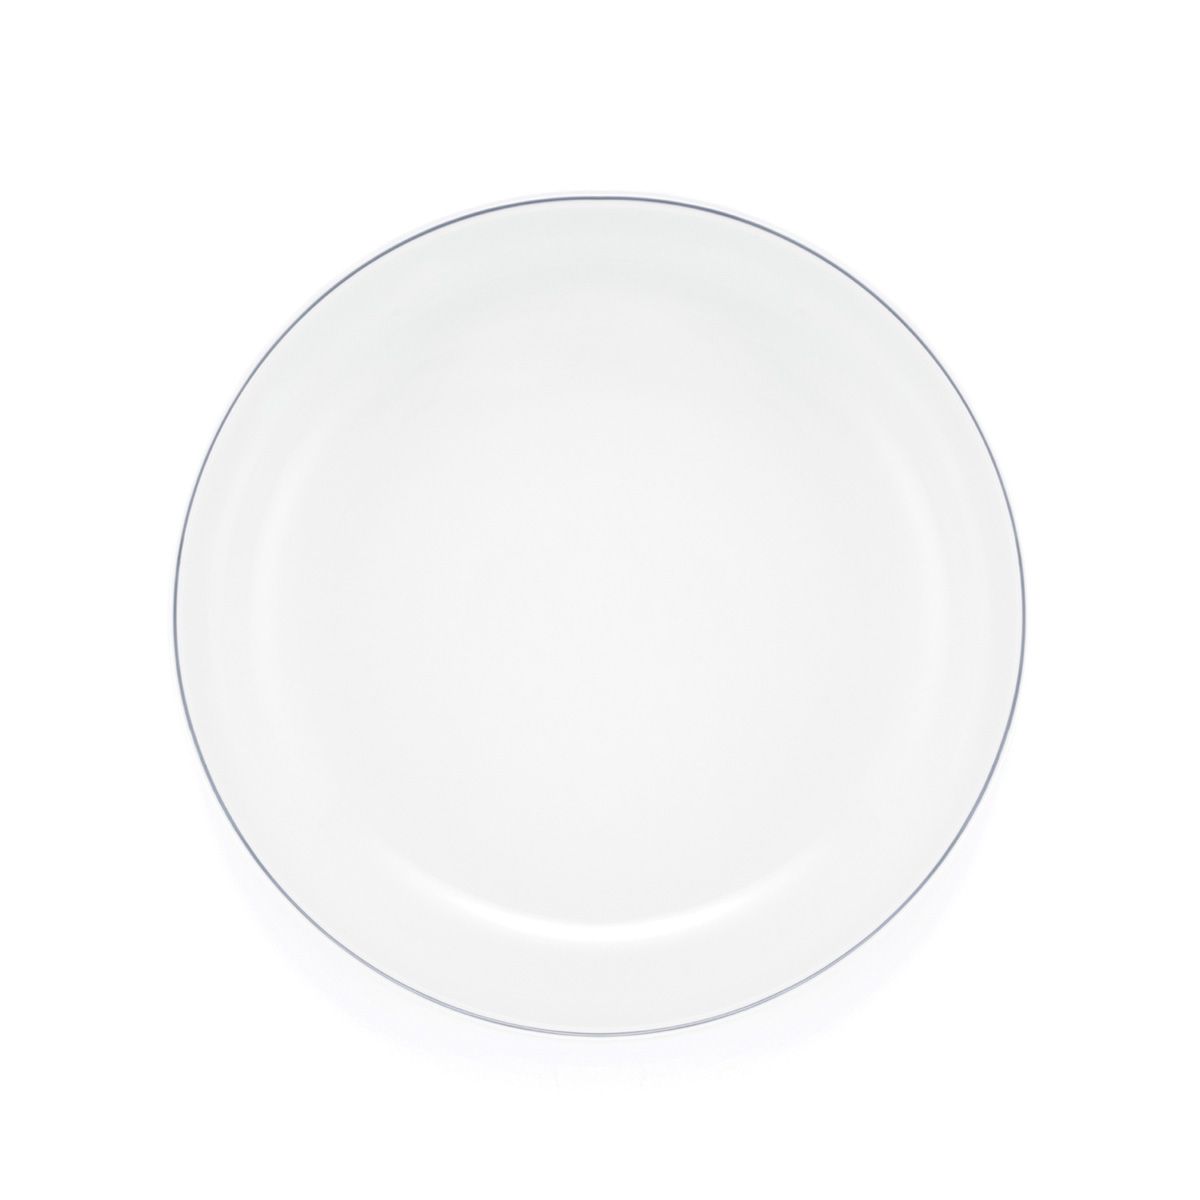 Bodum Blå Serving Plate Rounds, 1 Pc.